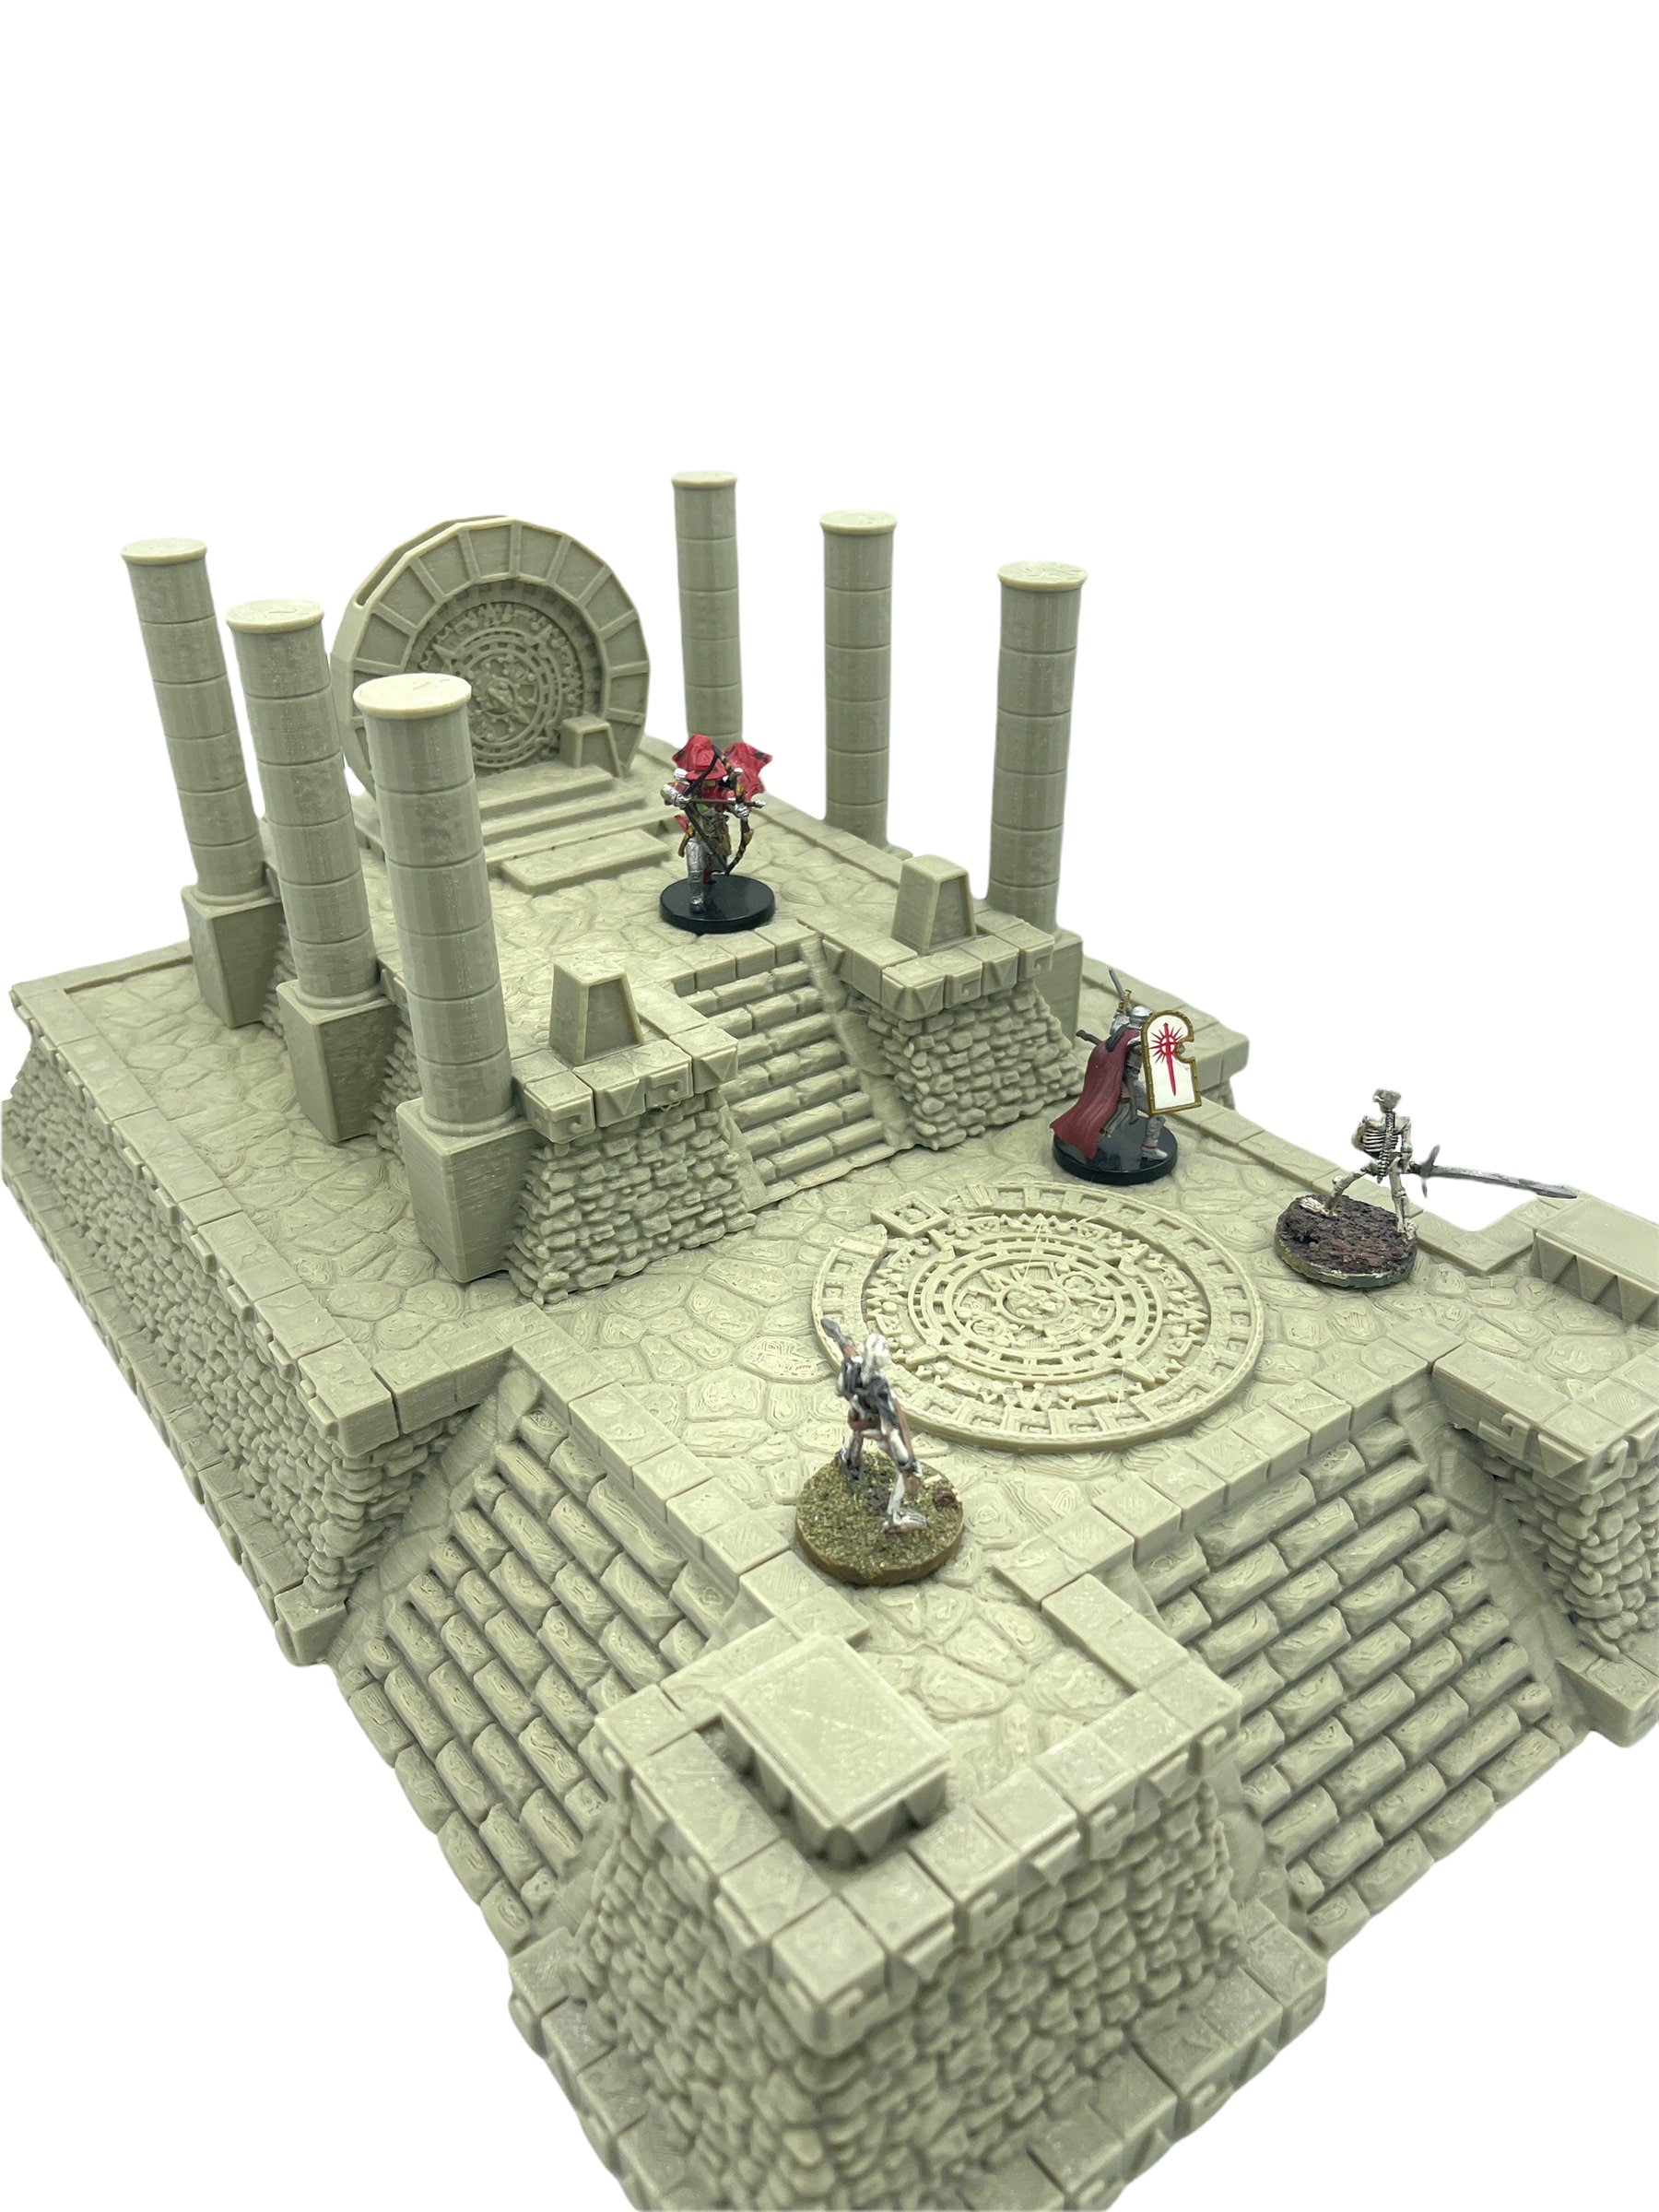 Jungle Summoning Portal / Dark Realms Forge / RPG and Wargame 3d Printed Tabletop Terrain / Licensed Printer